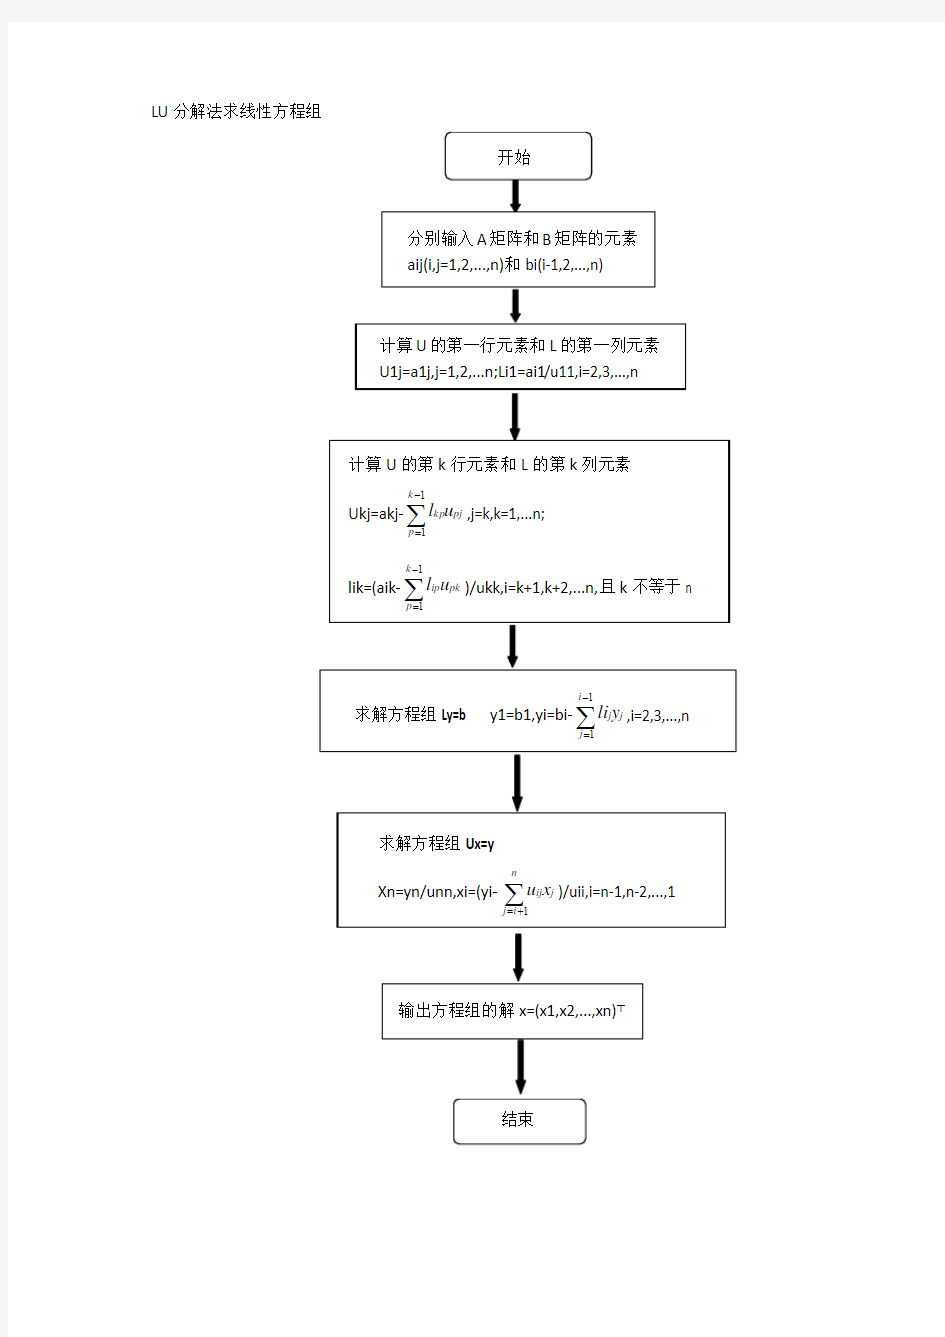 LU分解法求线性方程组算法流程图